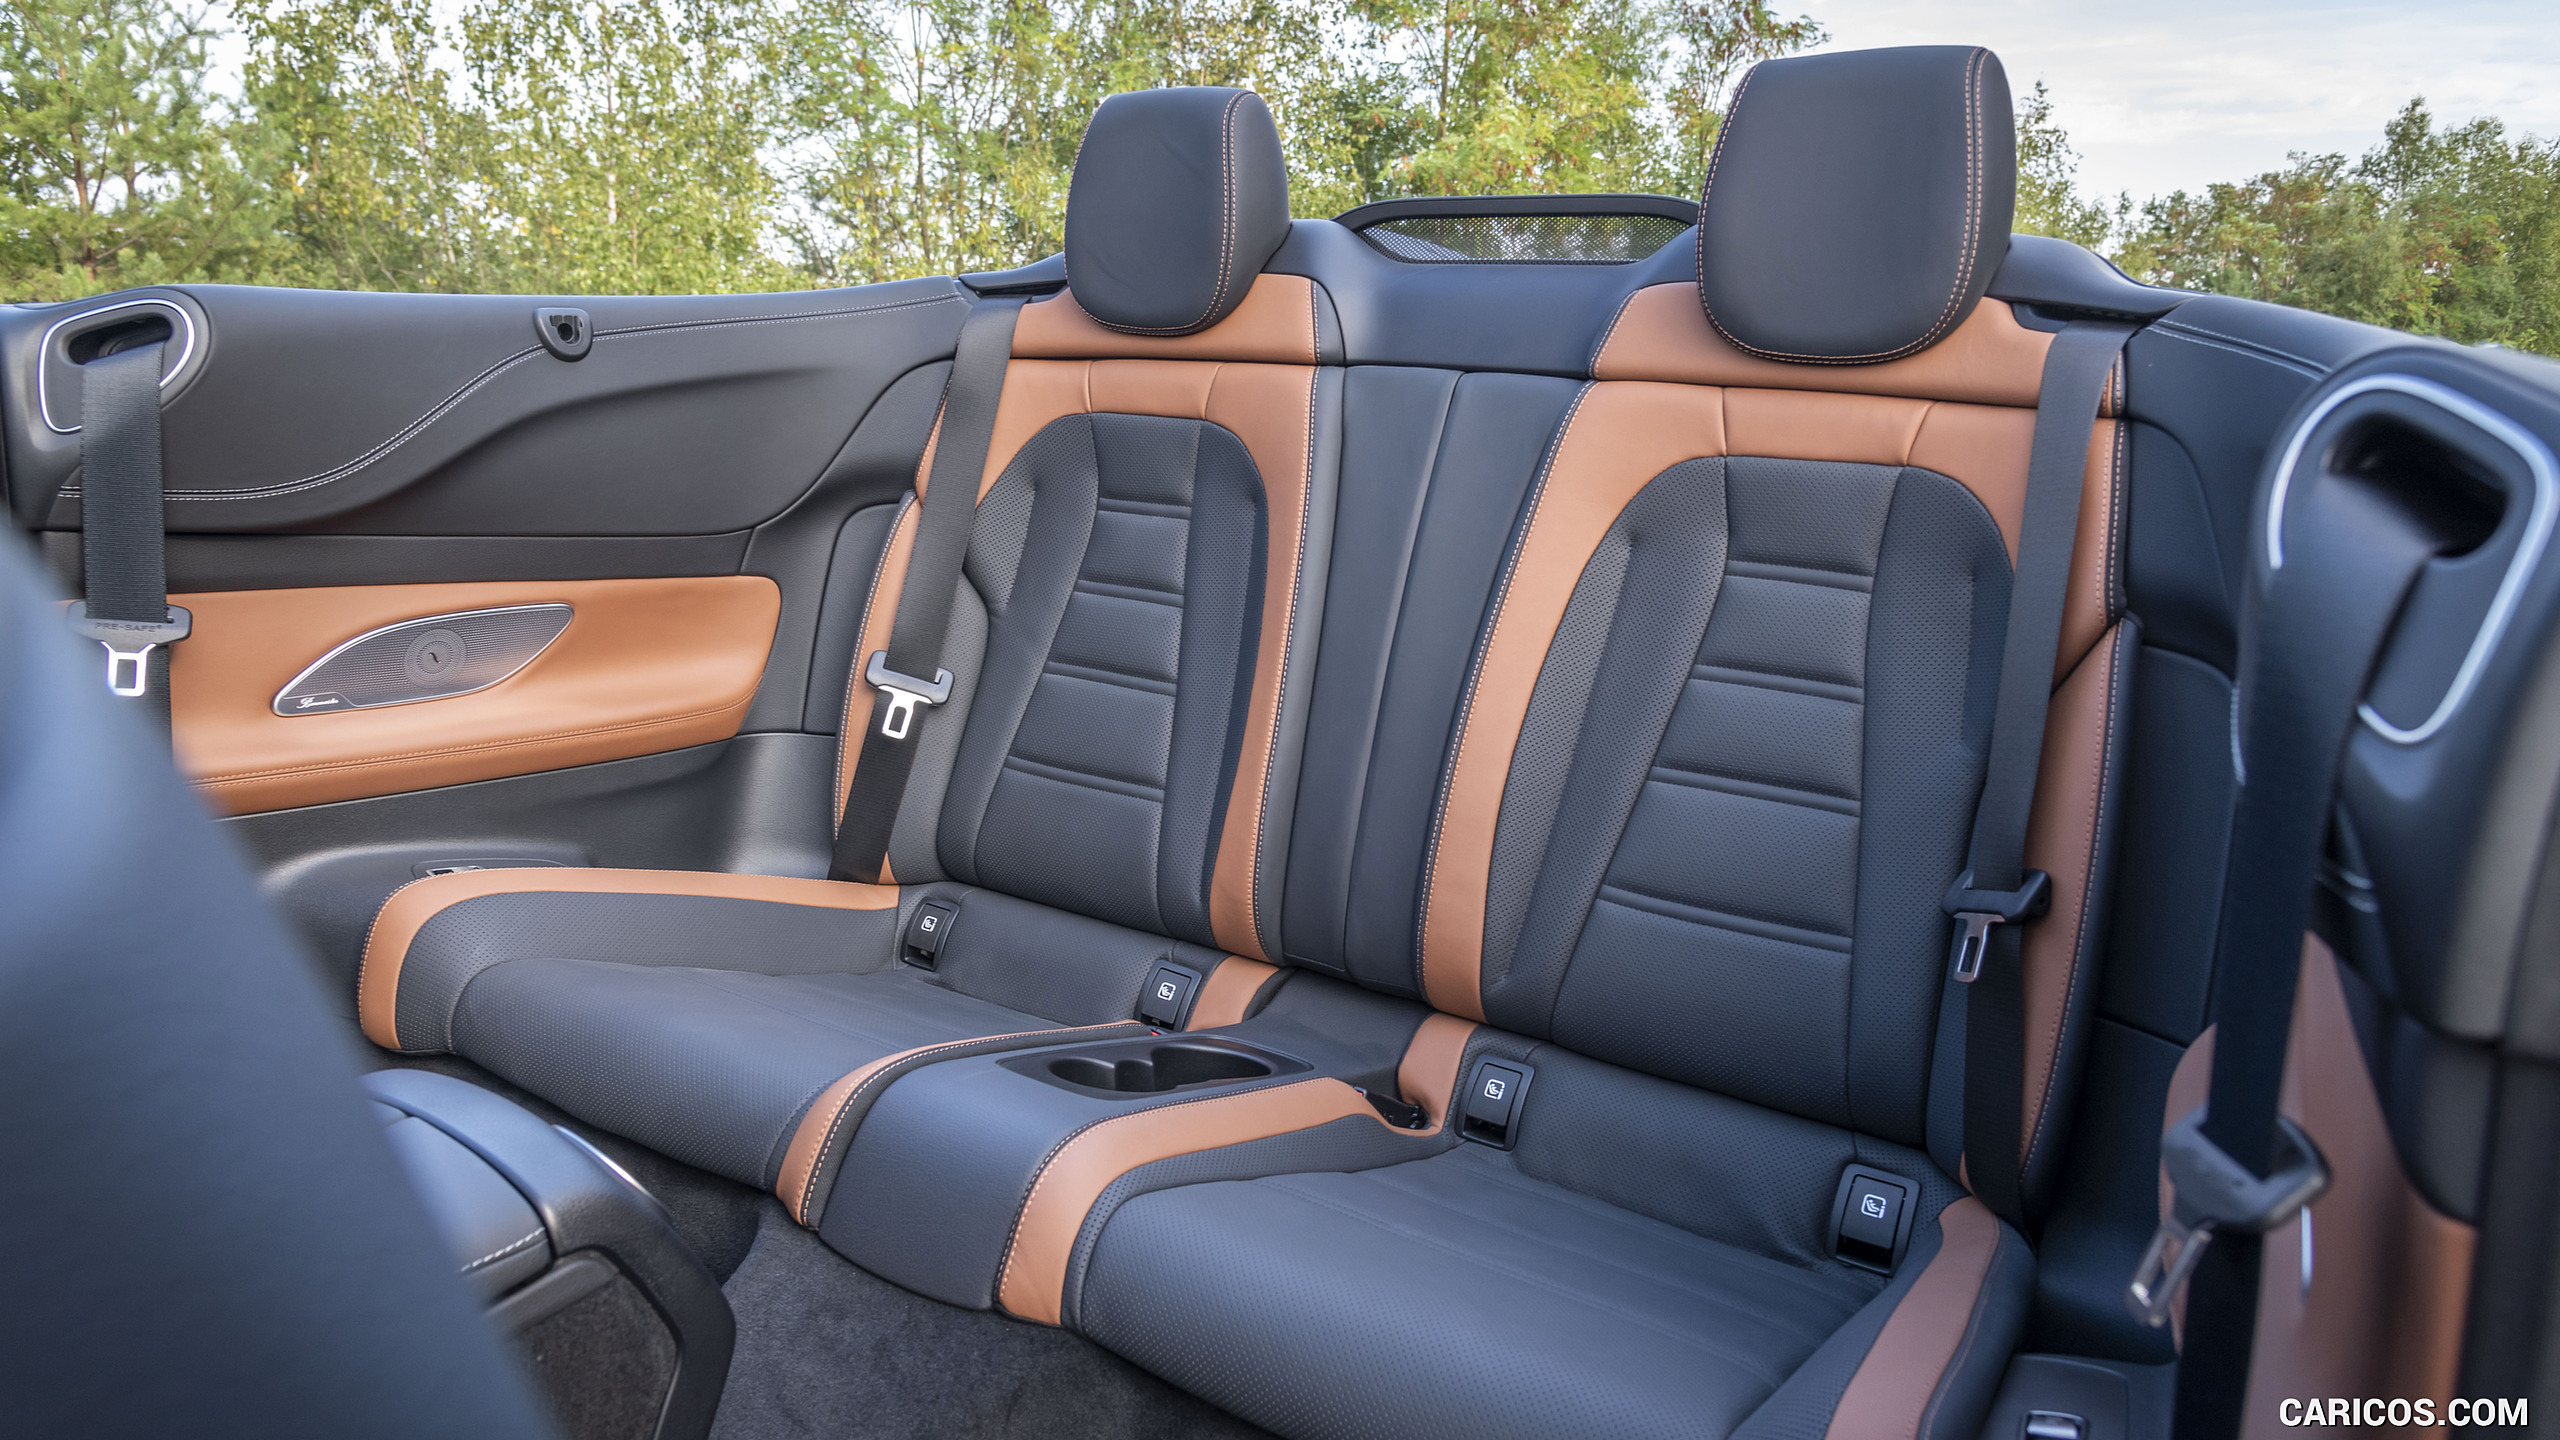 2021 Mercedes-AMG E 53 4MATIC+ Cabriolet - Interior, Rear Seats, #96 of 166